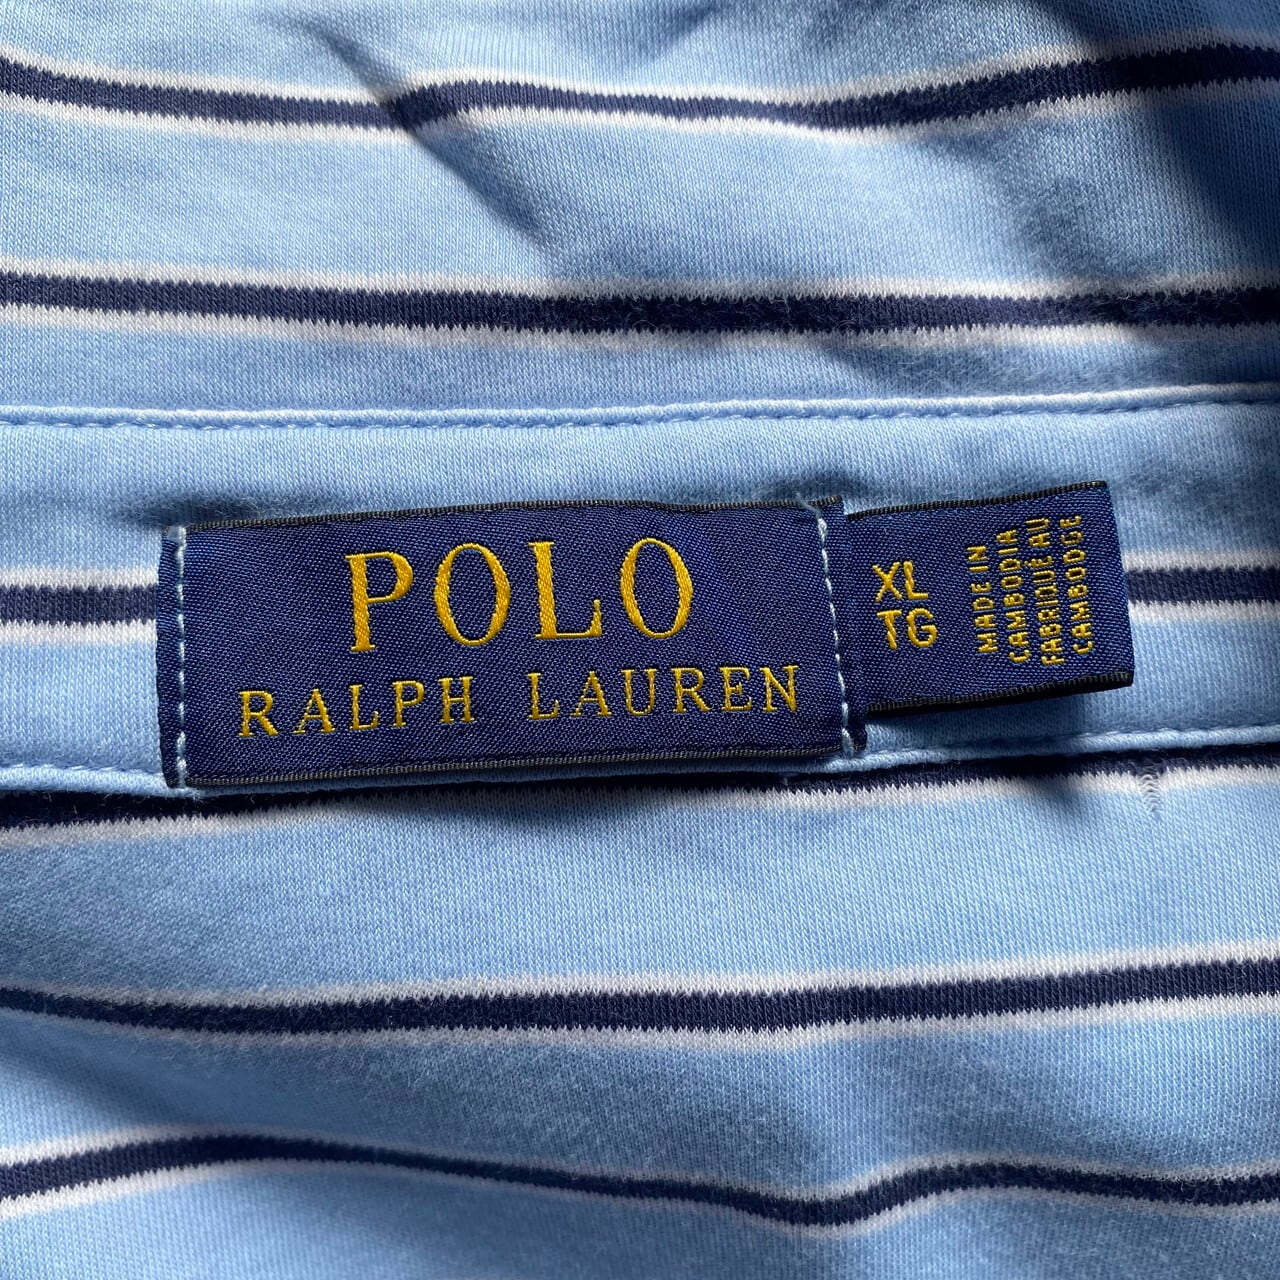 Polo Ralph Lauren ポロラルフローレン マルチボーダー ポロシャツ メンズXL 古着 ワンポイントロゴ刺? ライトブルー 水色